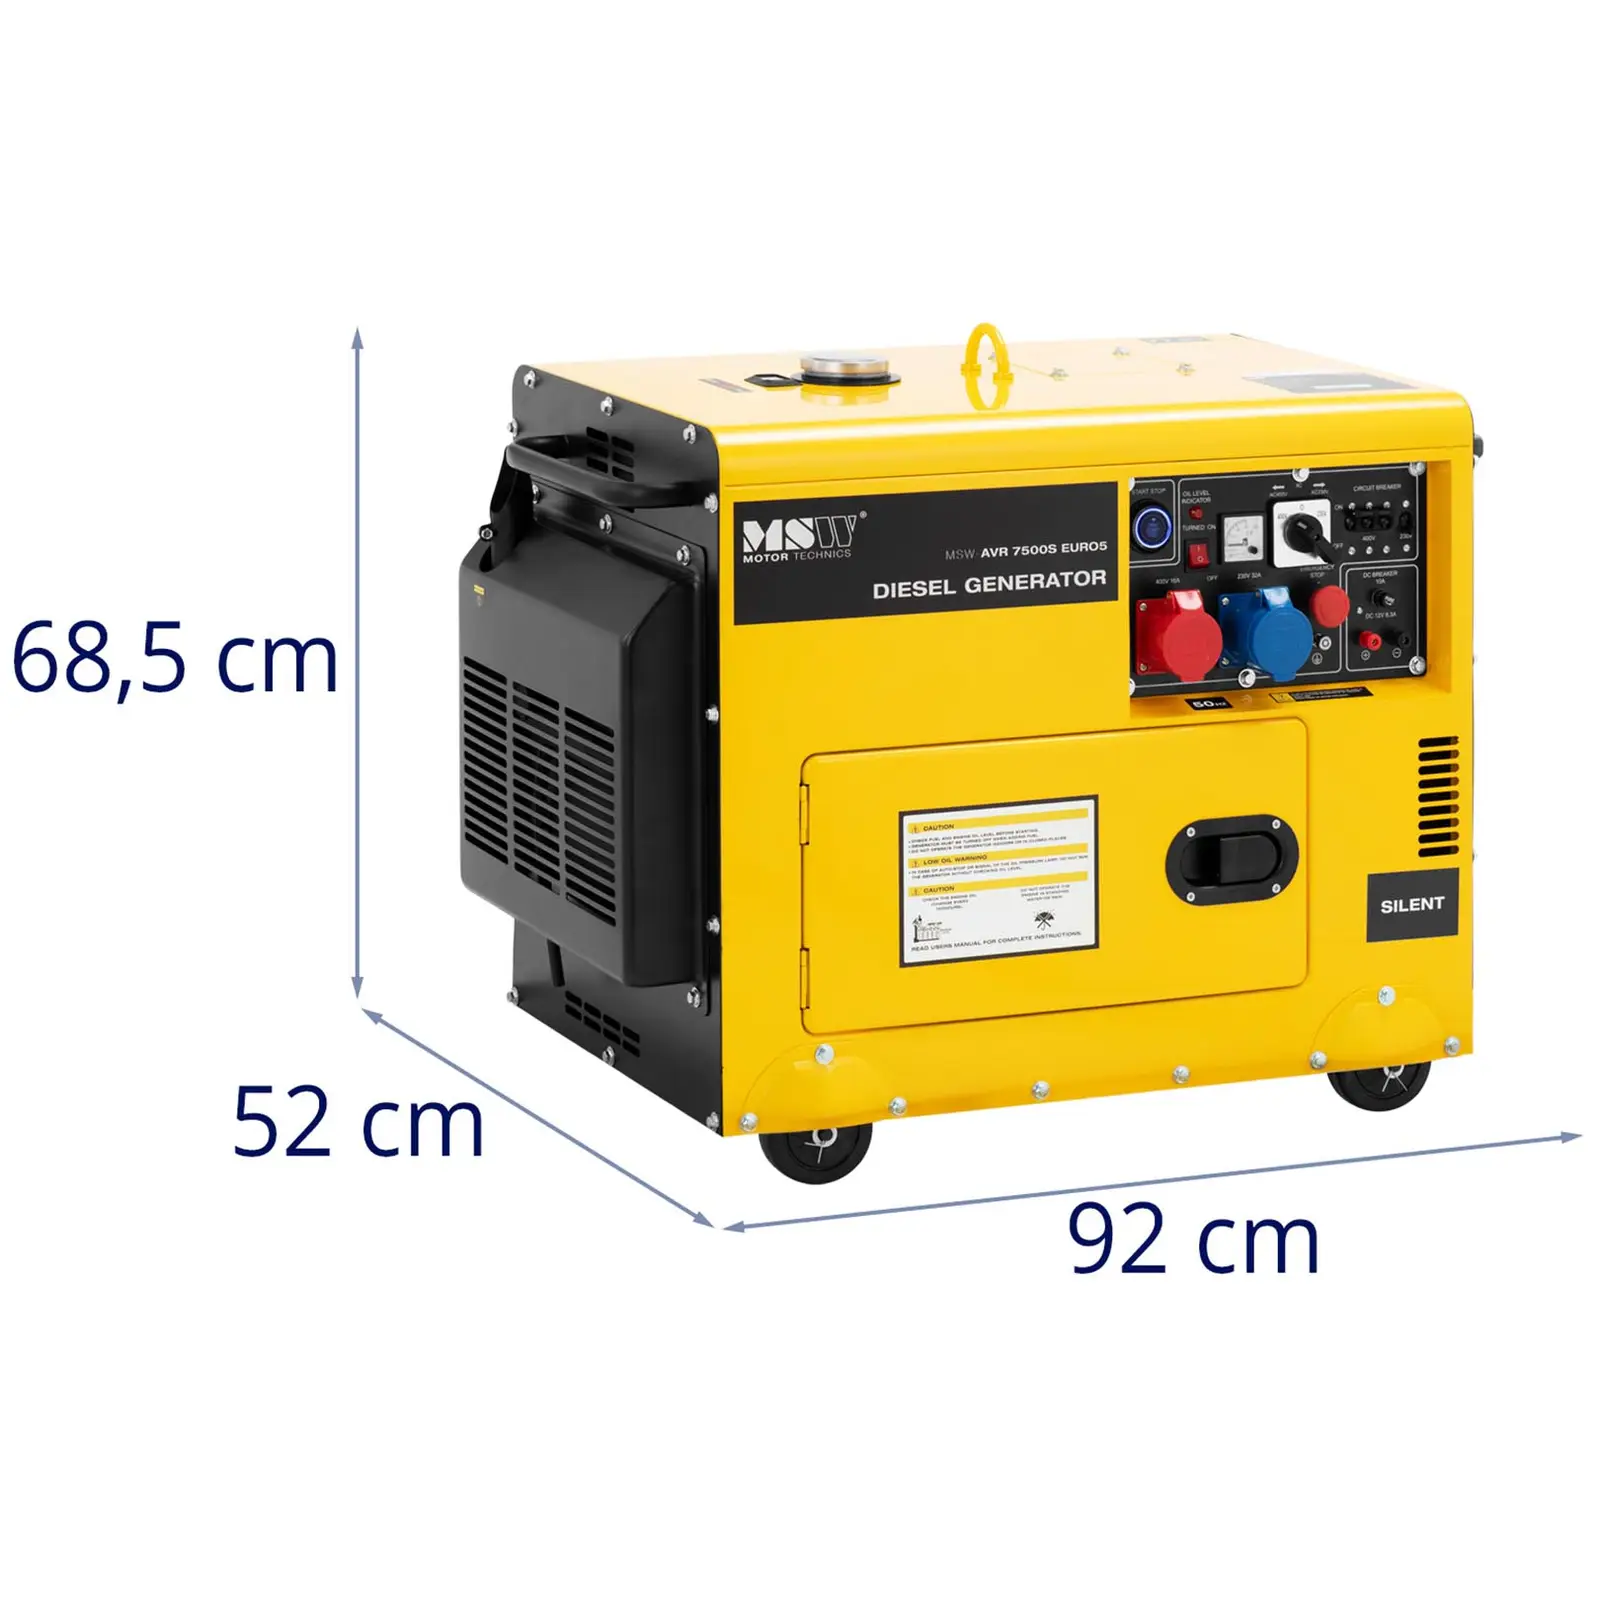 Dieselgenerator - 6370/7500 W - 16 l - 240/400 V - mobil - AVR - Euro 5